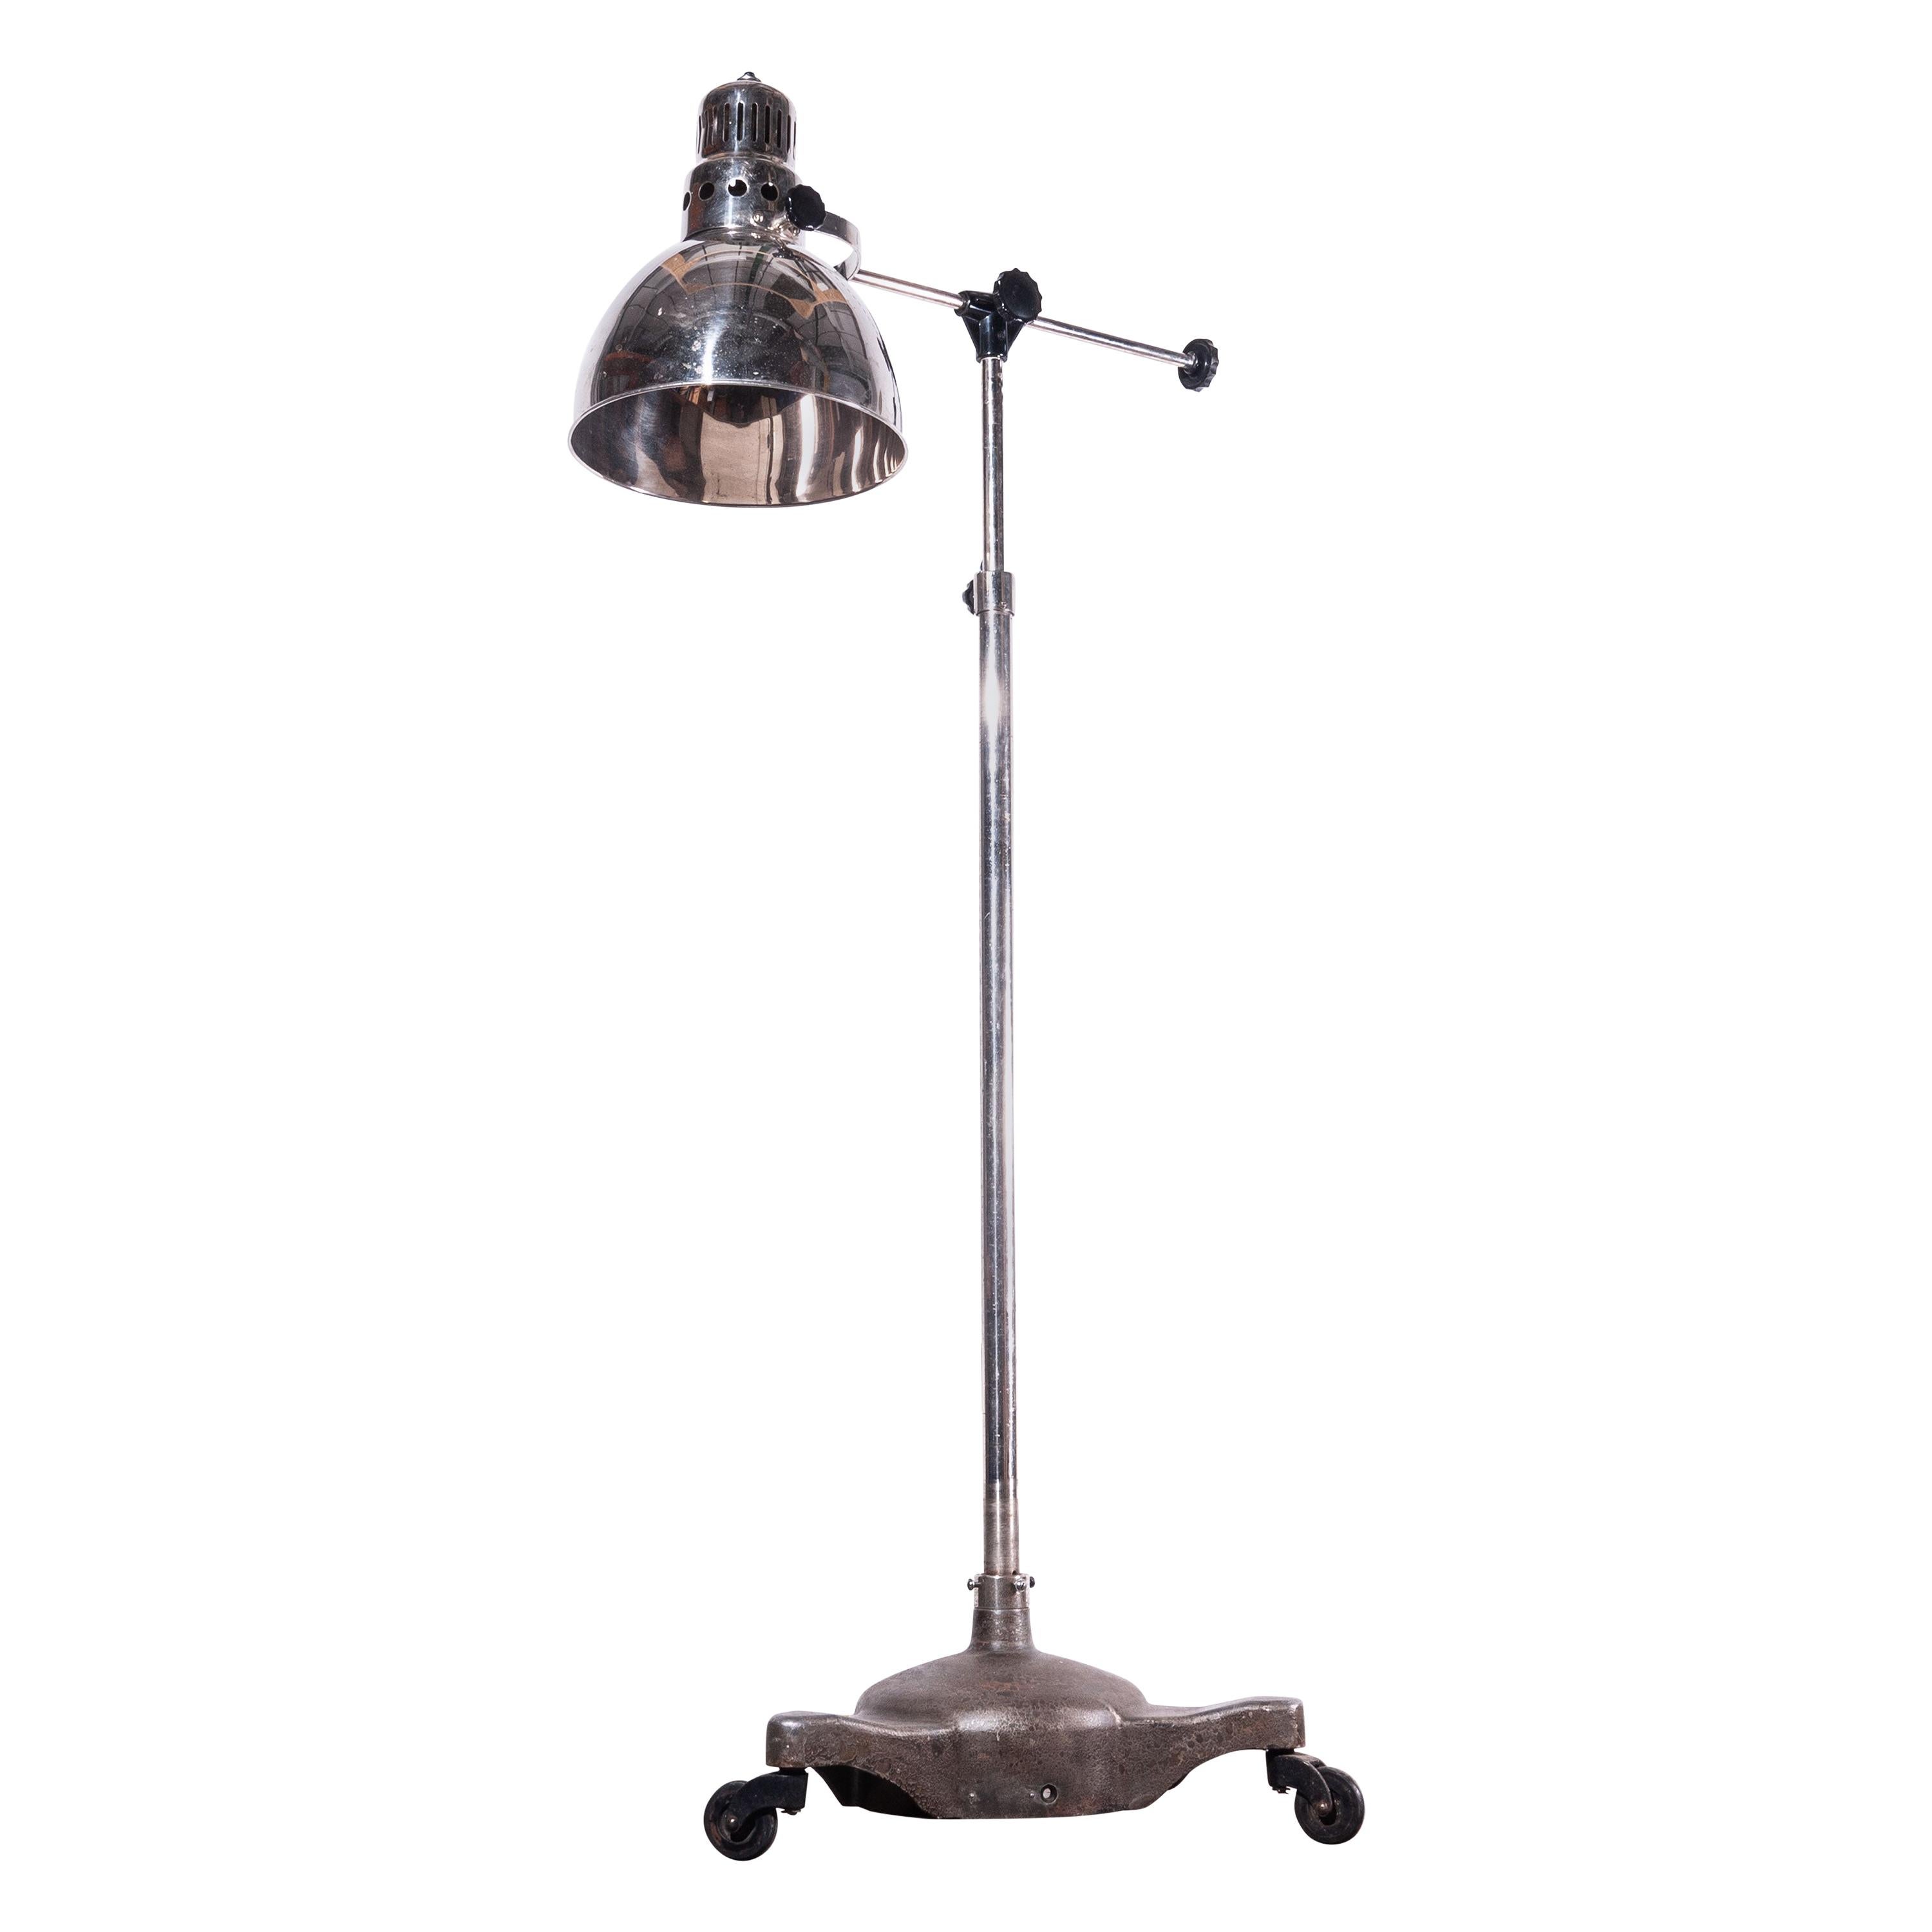 VINTAGE THEATRE LIGHT ANTIQUE FLOOR LAMP INDUSTRIAL LOFT DESIGN EAMES STARCK 50s 